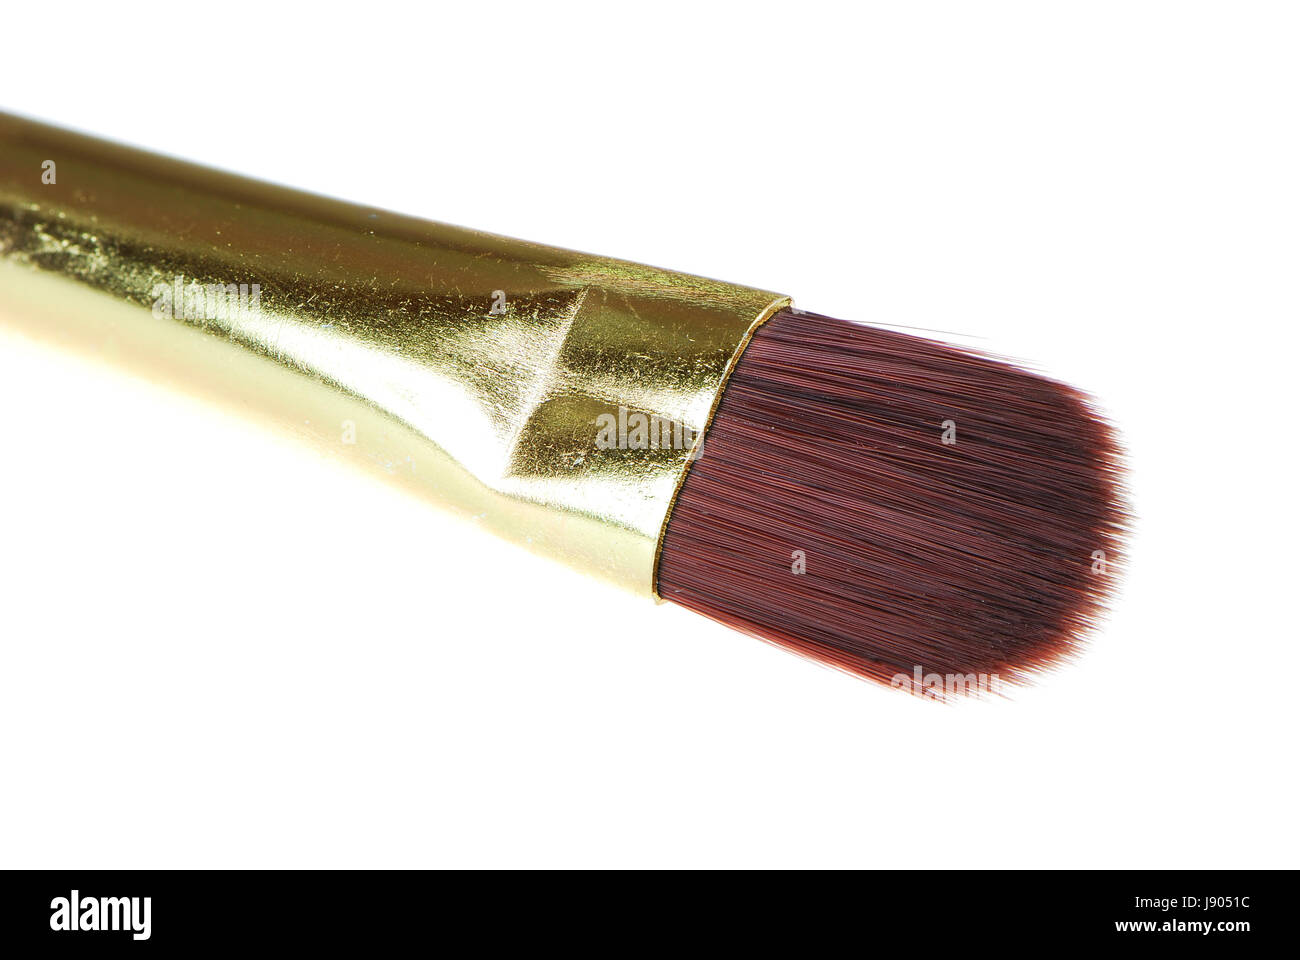 tool, object, isolated, closeup, golden, brush, equipment, paintbrush, Stock Photo